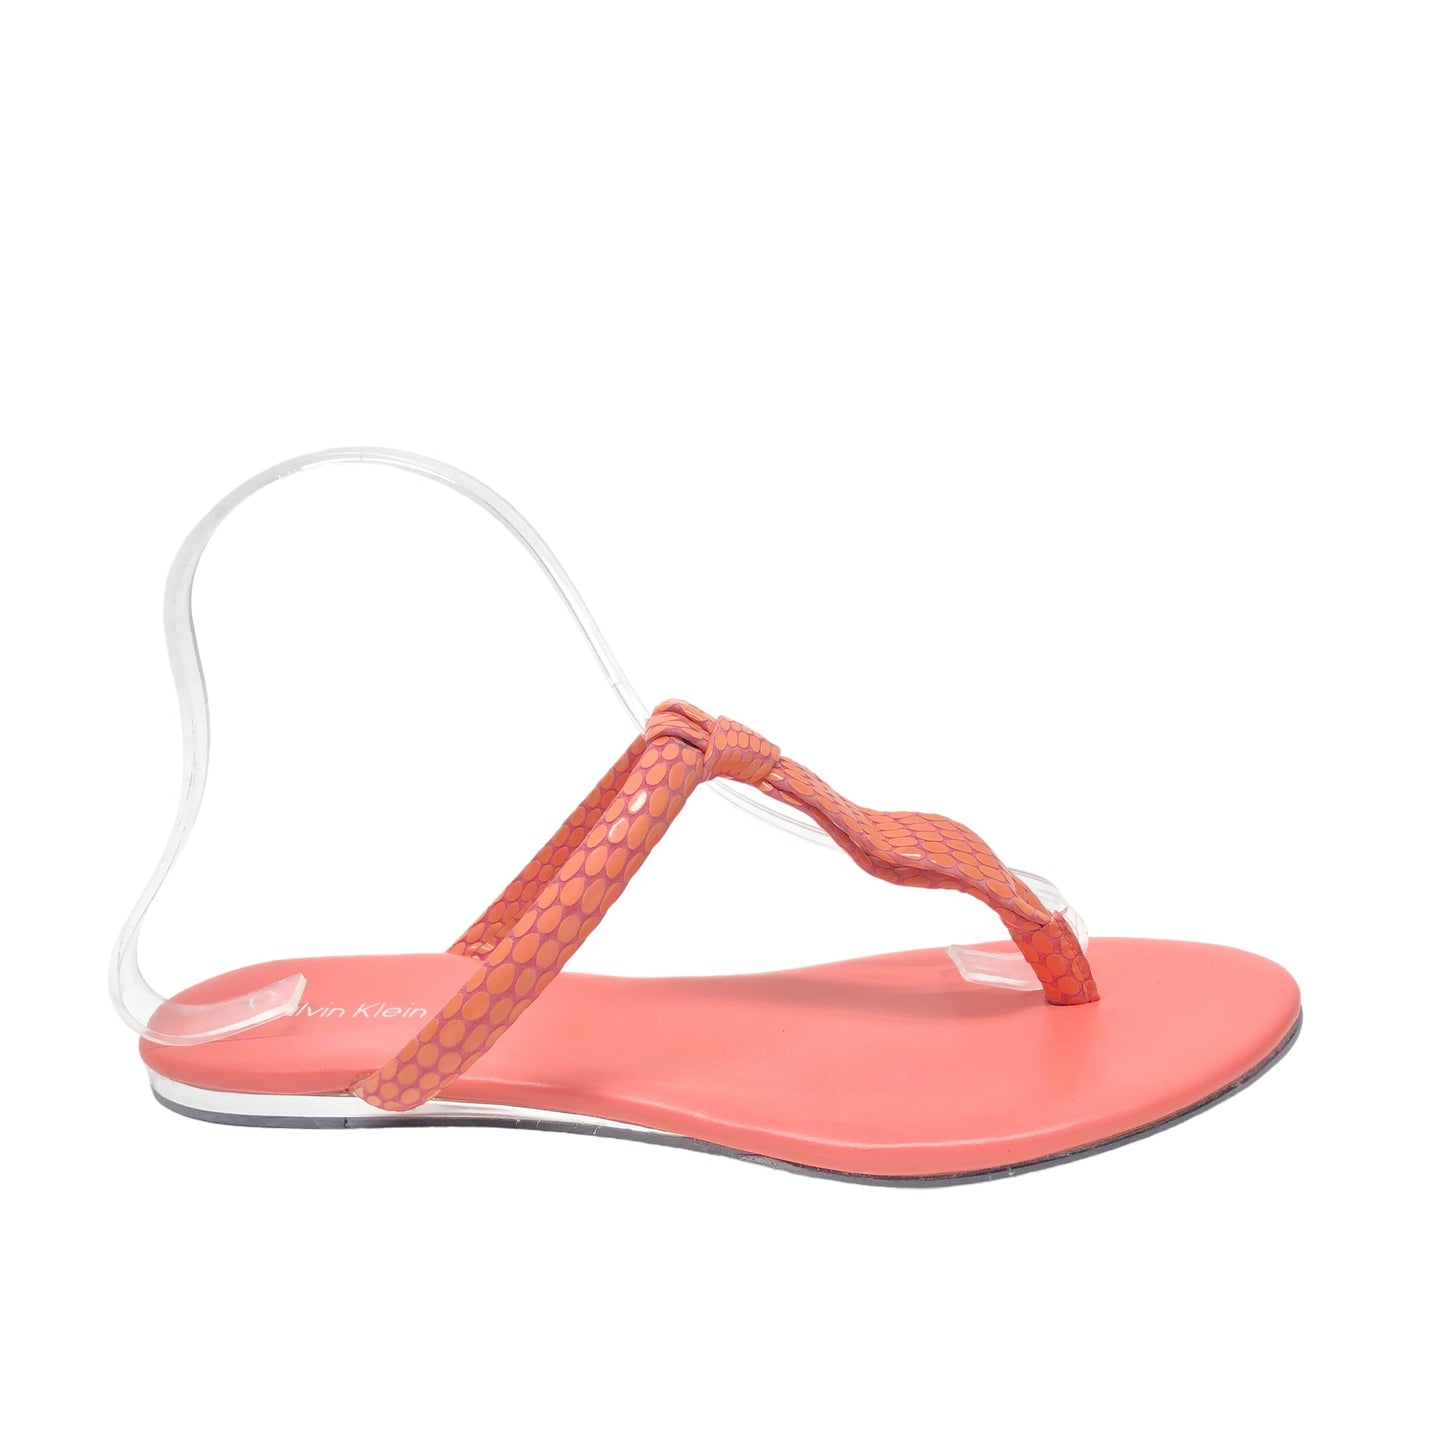 Coral Sandals Flats Calvin Klein, Size 8